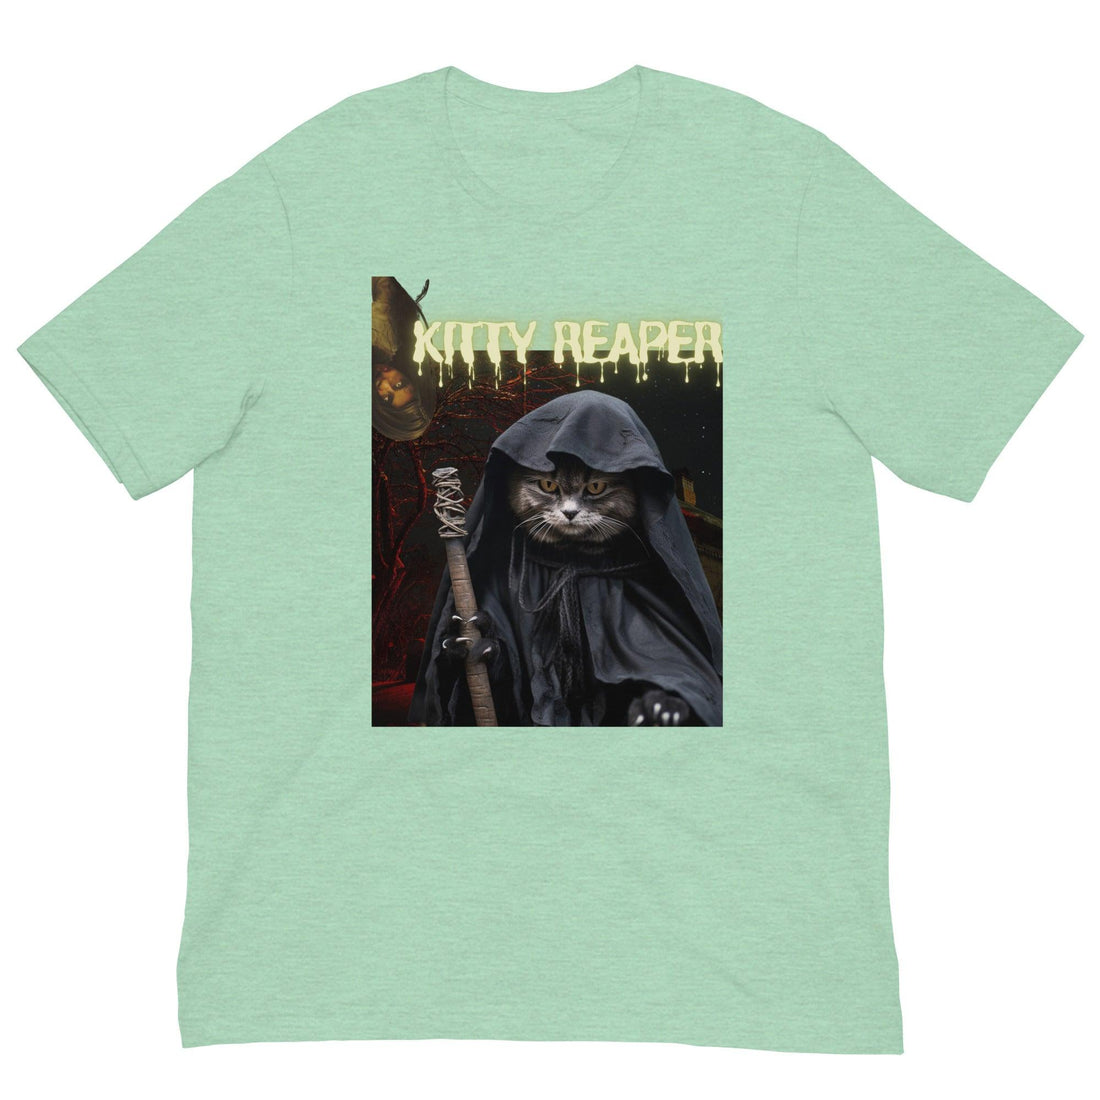 Kitty Reaper Halloween Cat Shirt - Cat Shirts USA